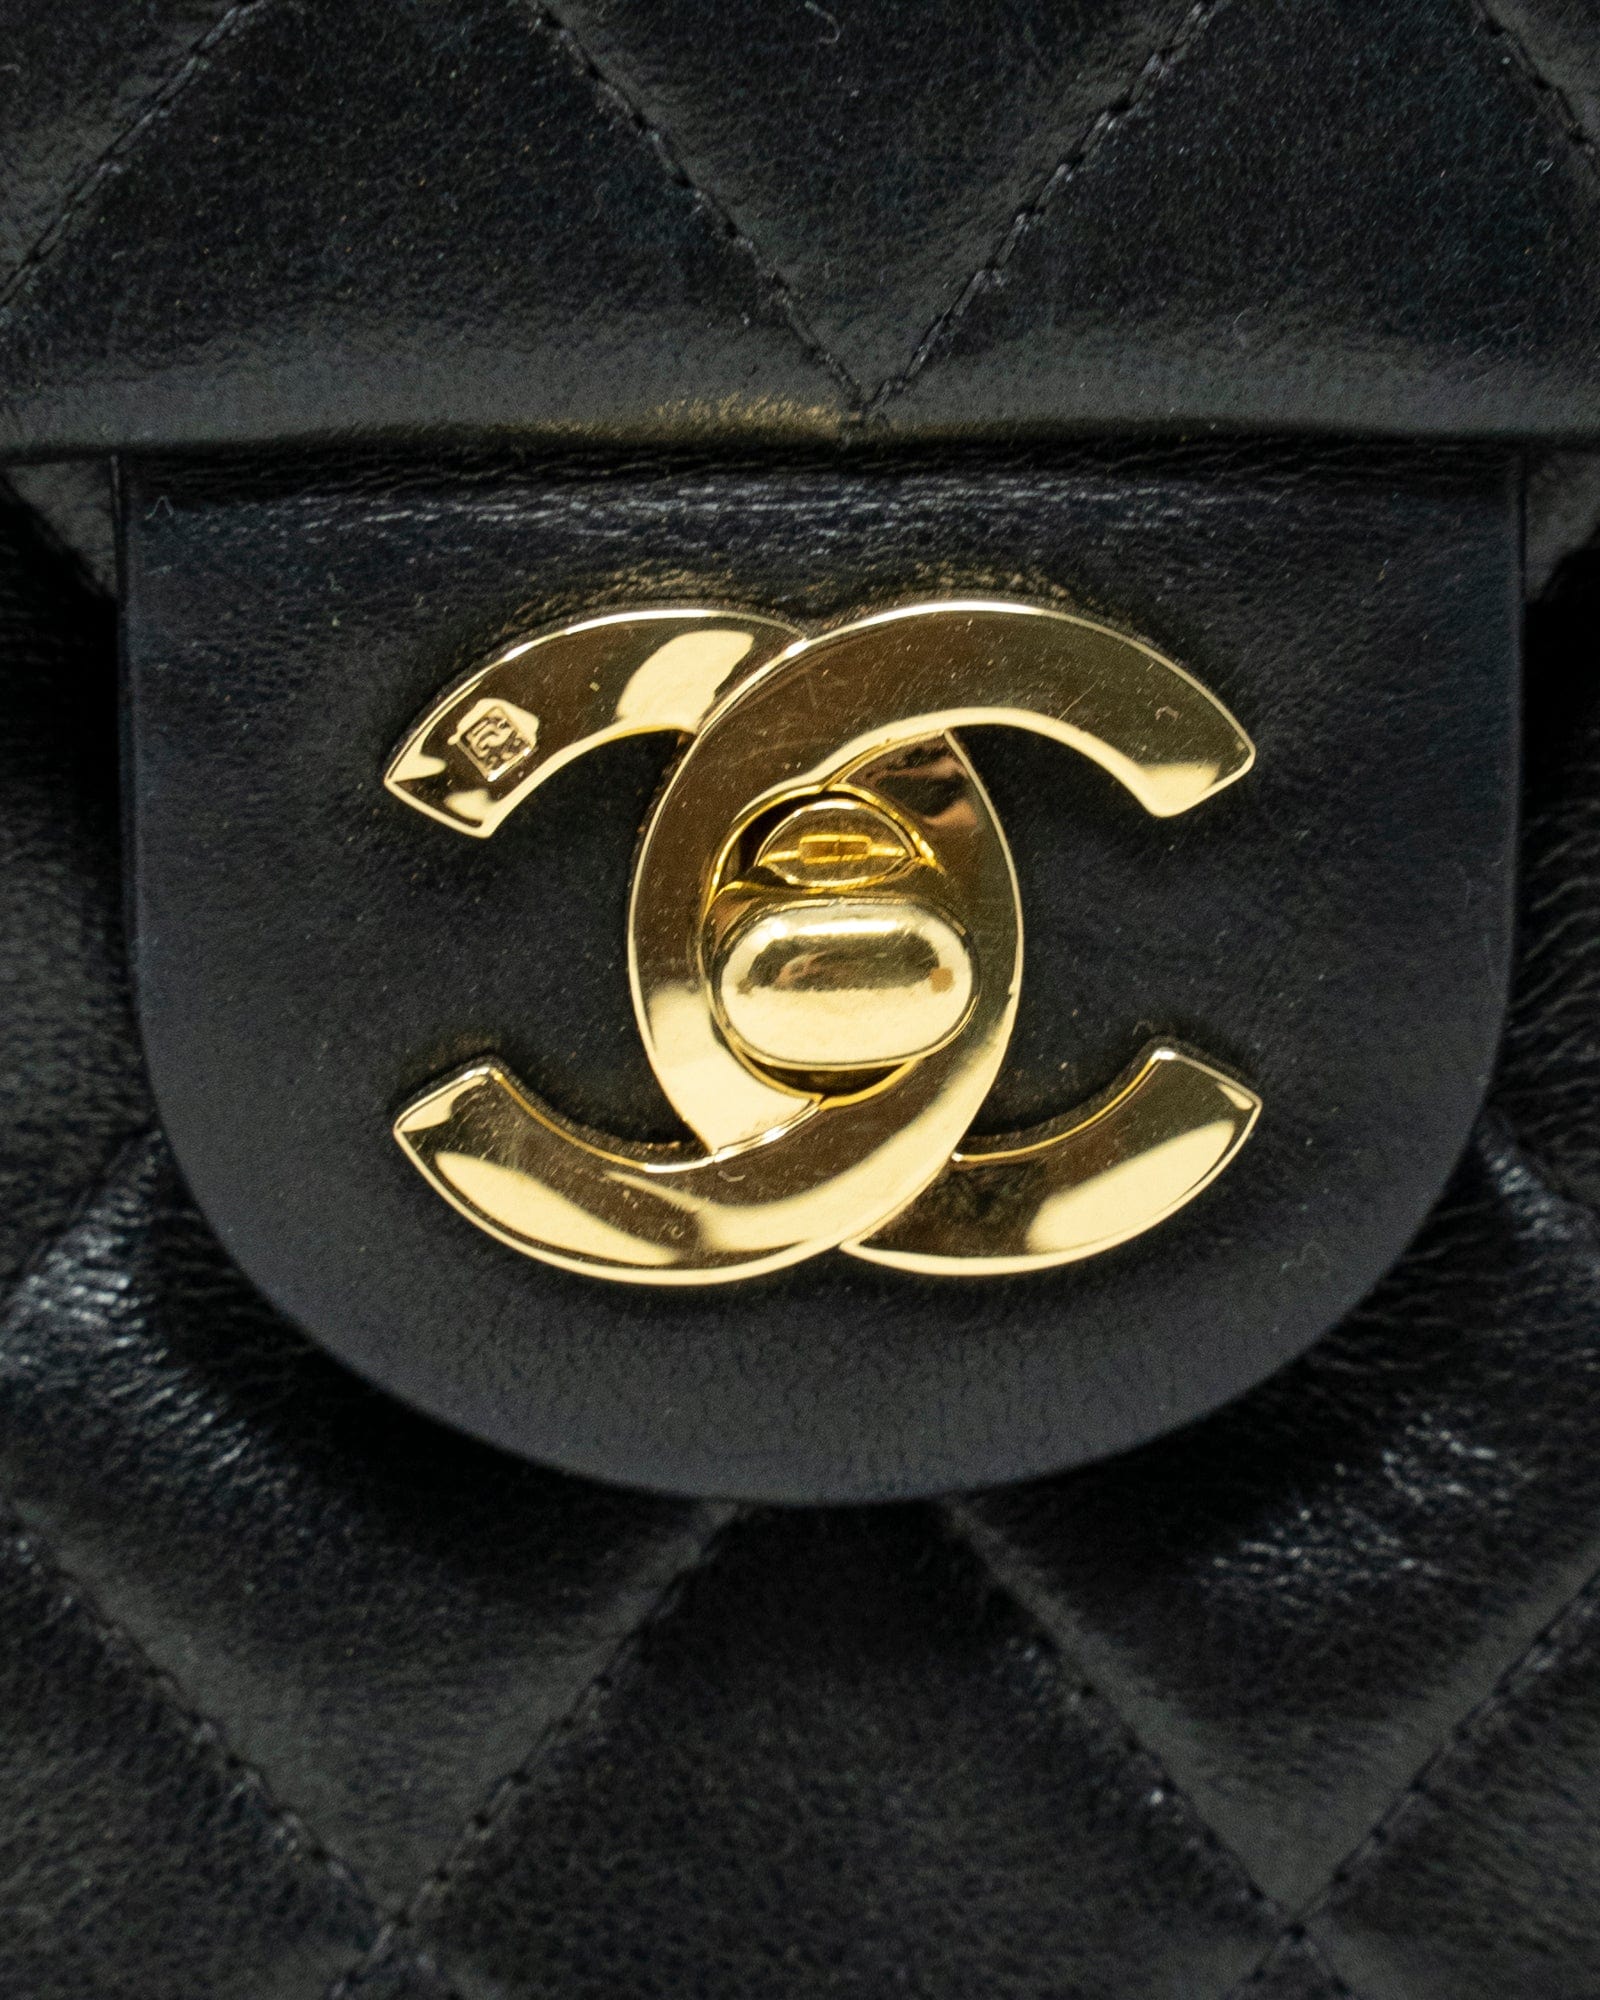 Chanel Vintage Chanel Black Square Mini Classic Flap Bag - ASL2420